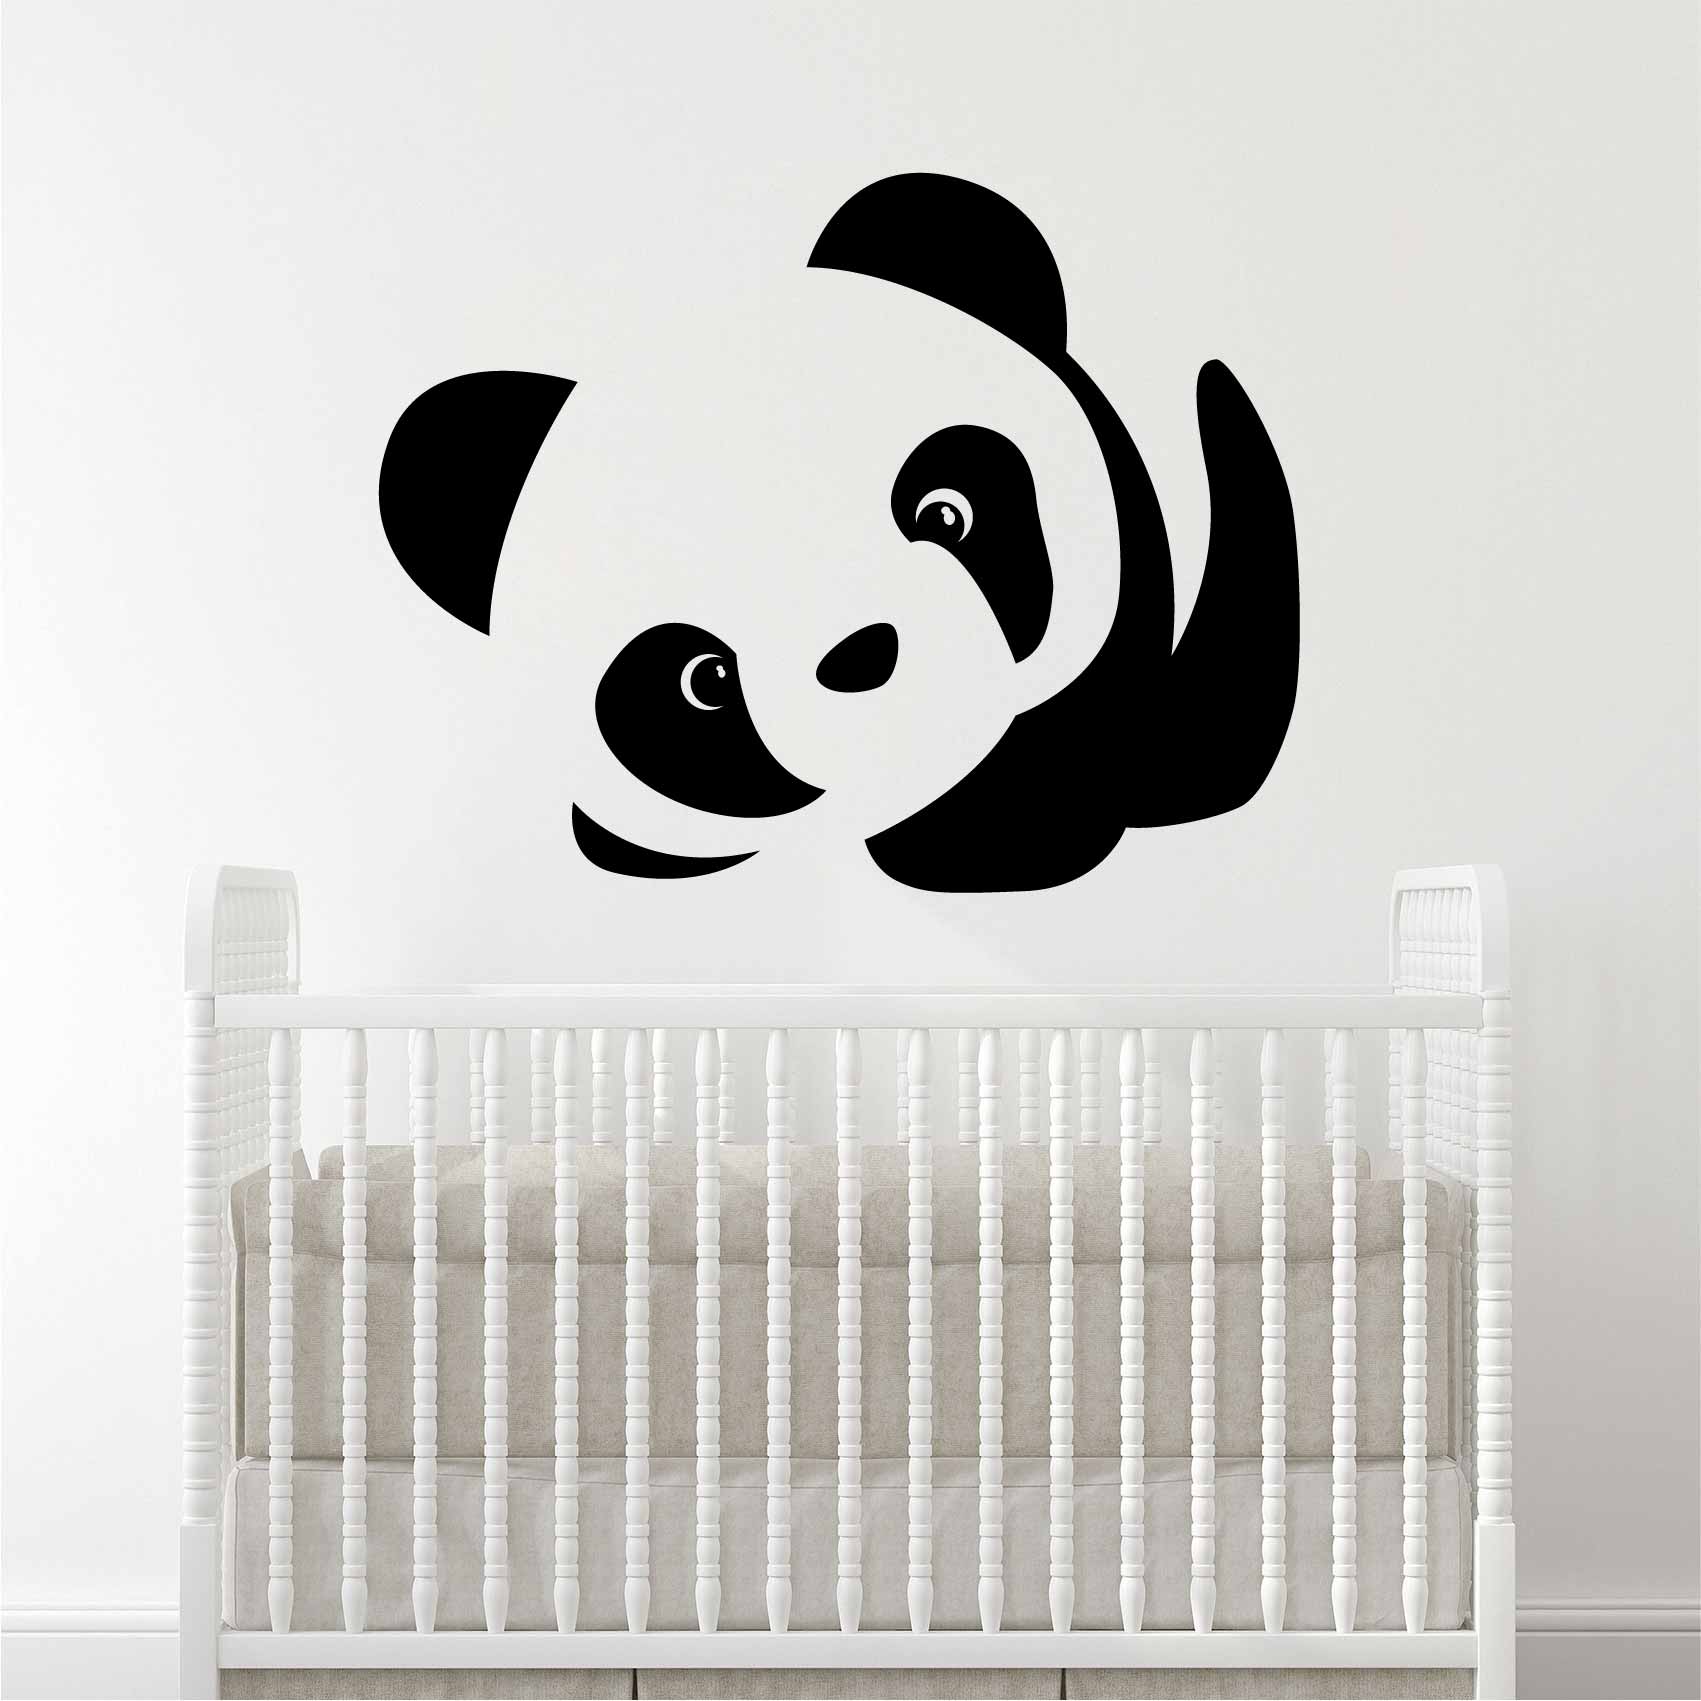 stickers-bébé-panda-ref6panda-stickers-muraux-panda-autocollant-chambre-salon-deco-sticker-mural-pandas-animaux